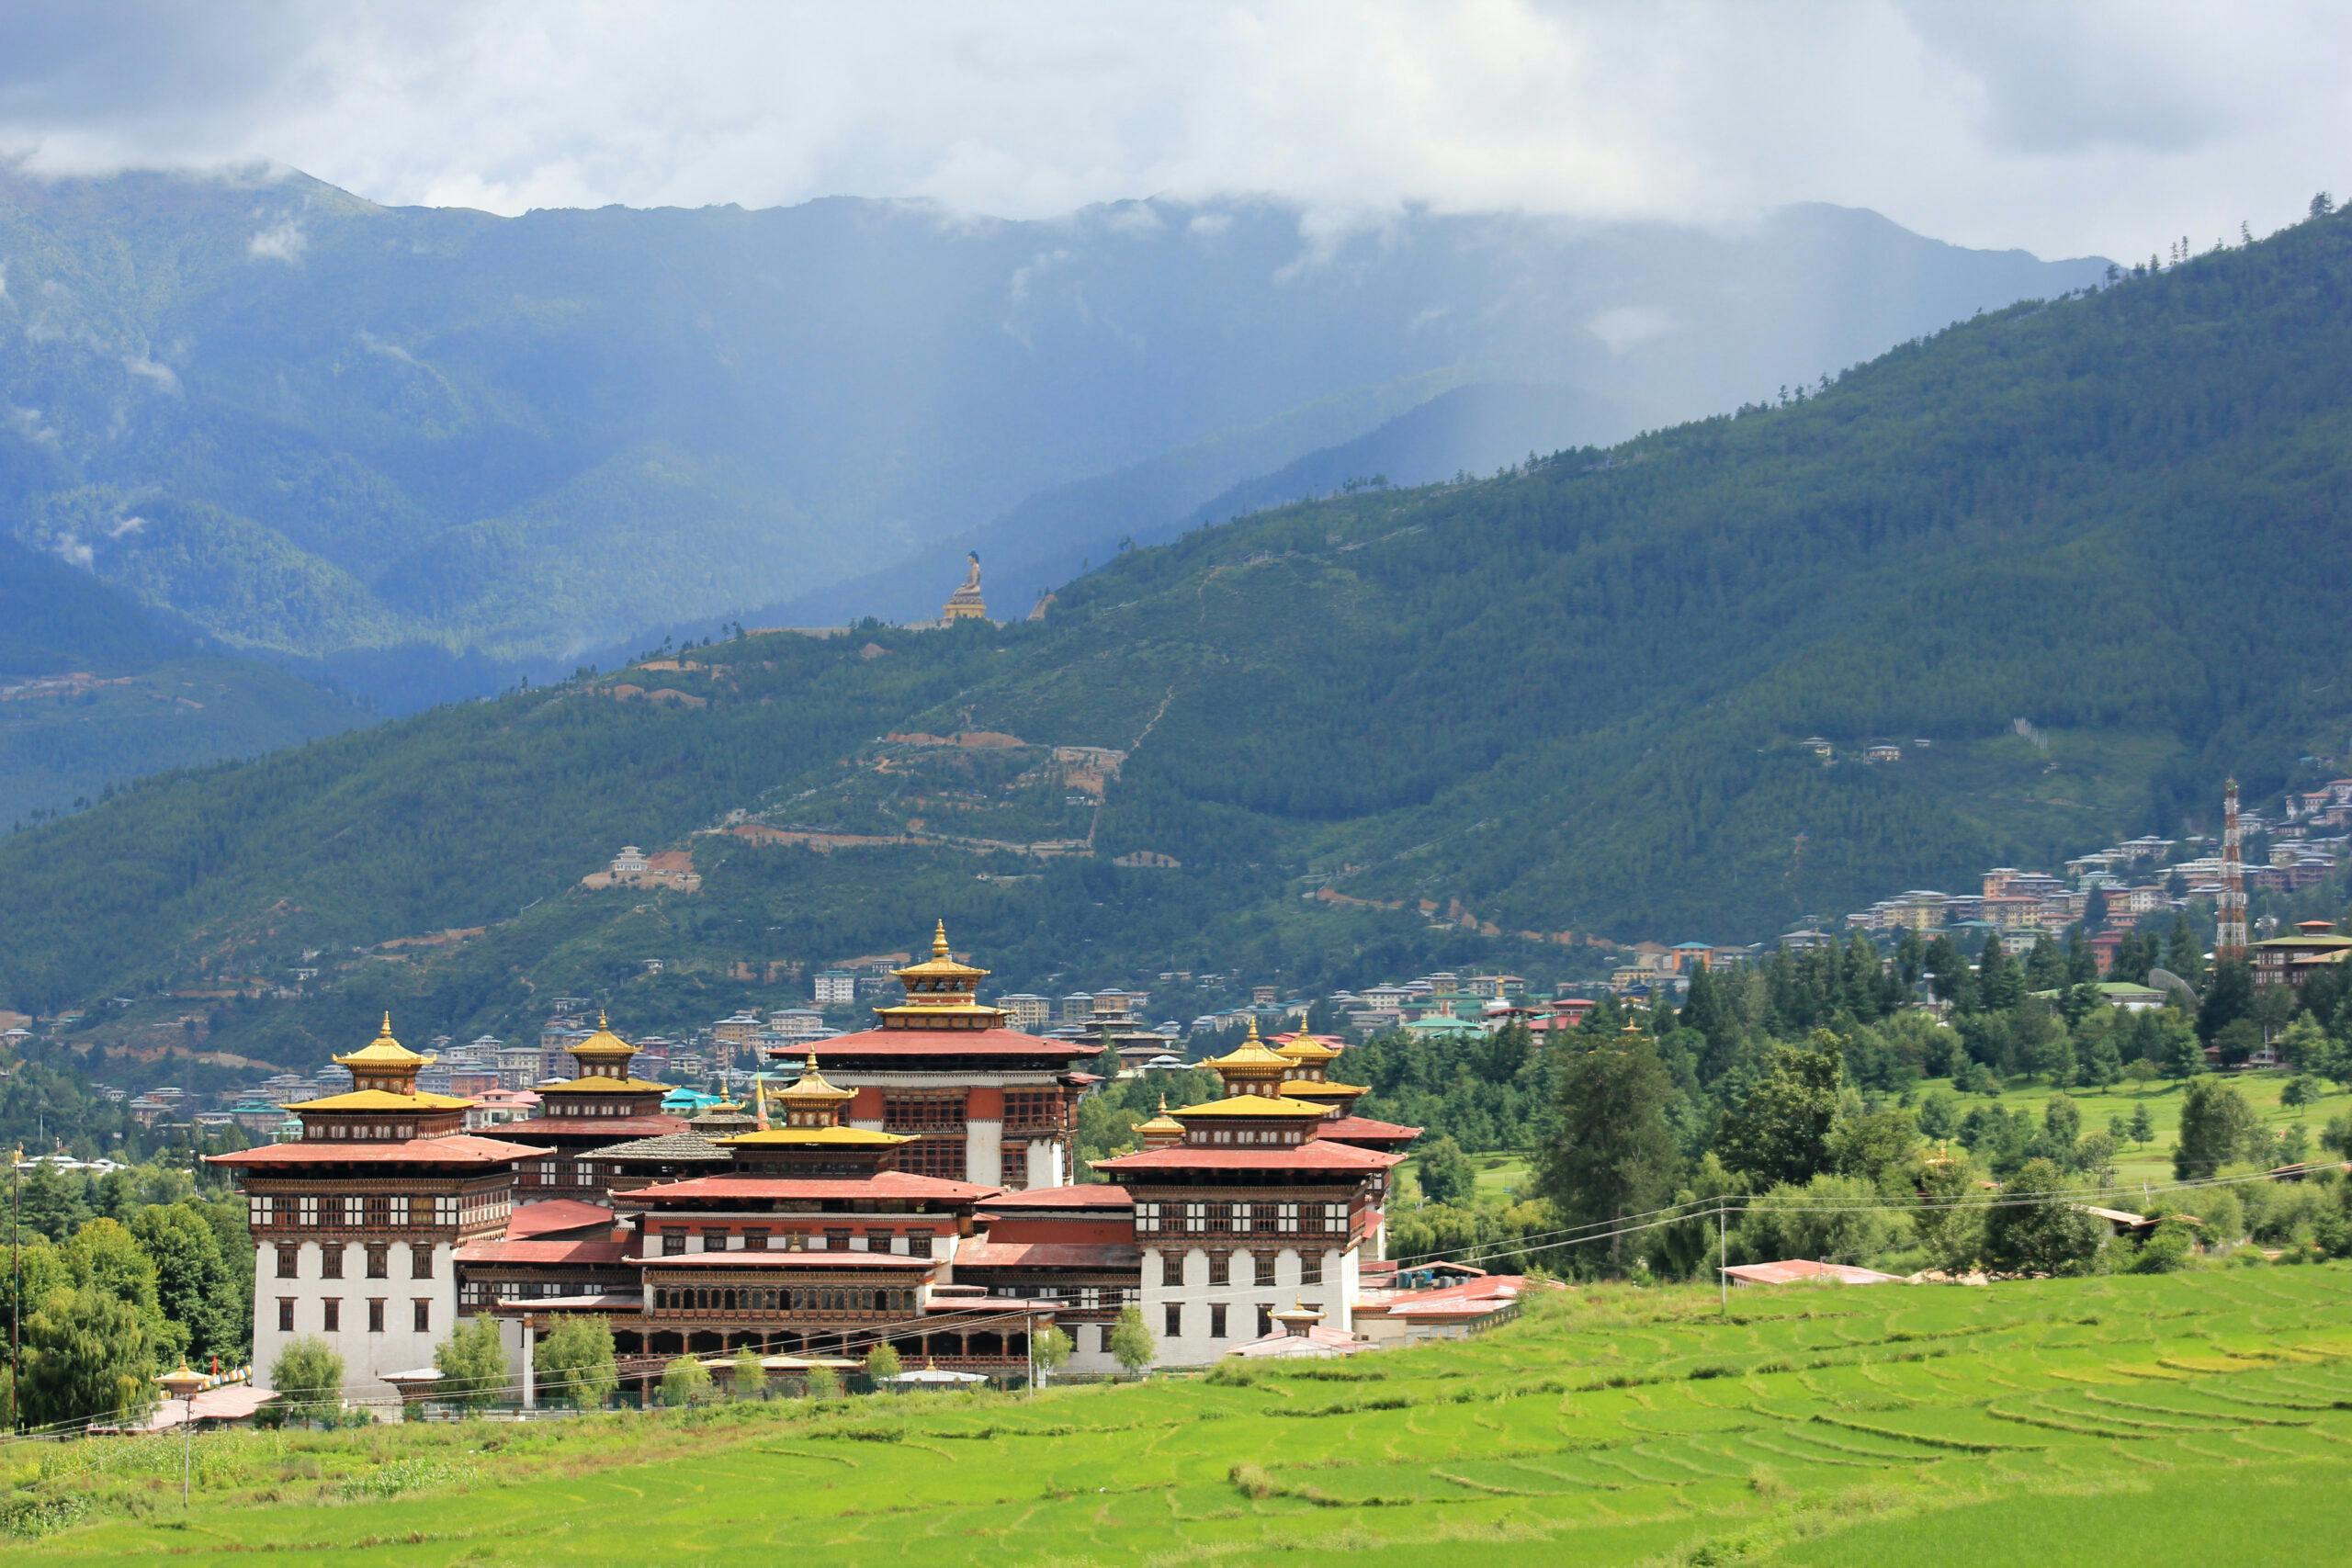 We're reimagining a fairer way to visit Bhutan